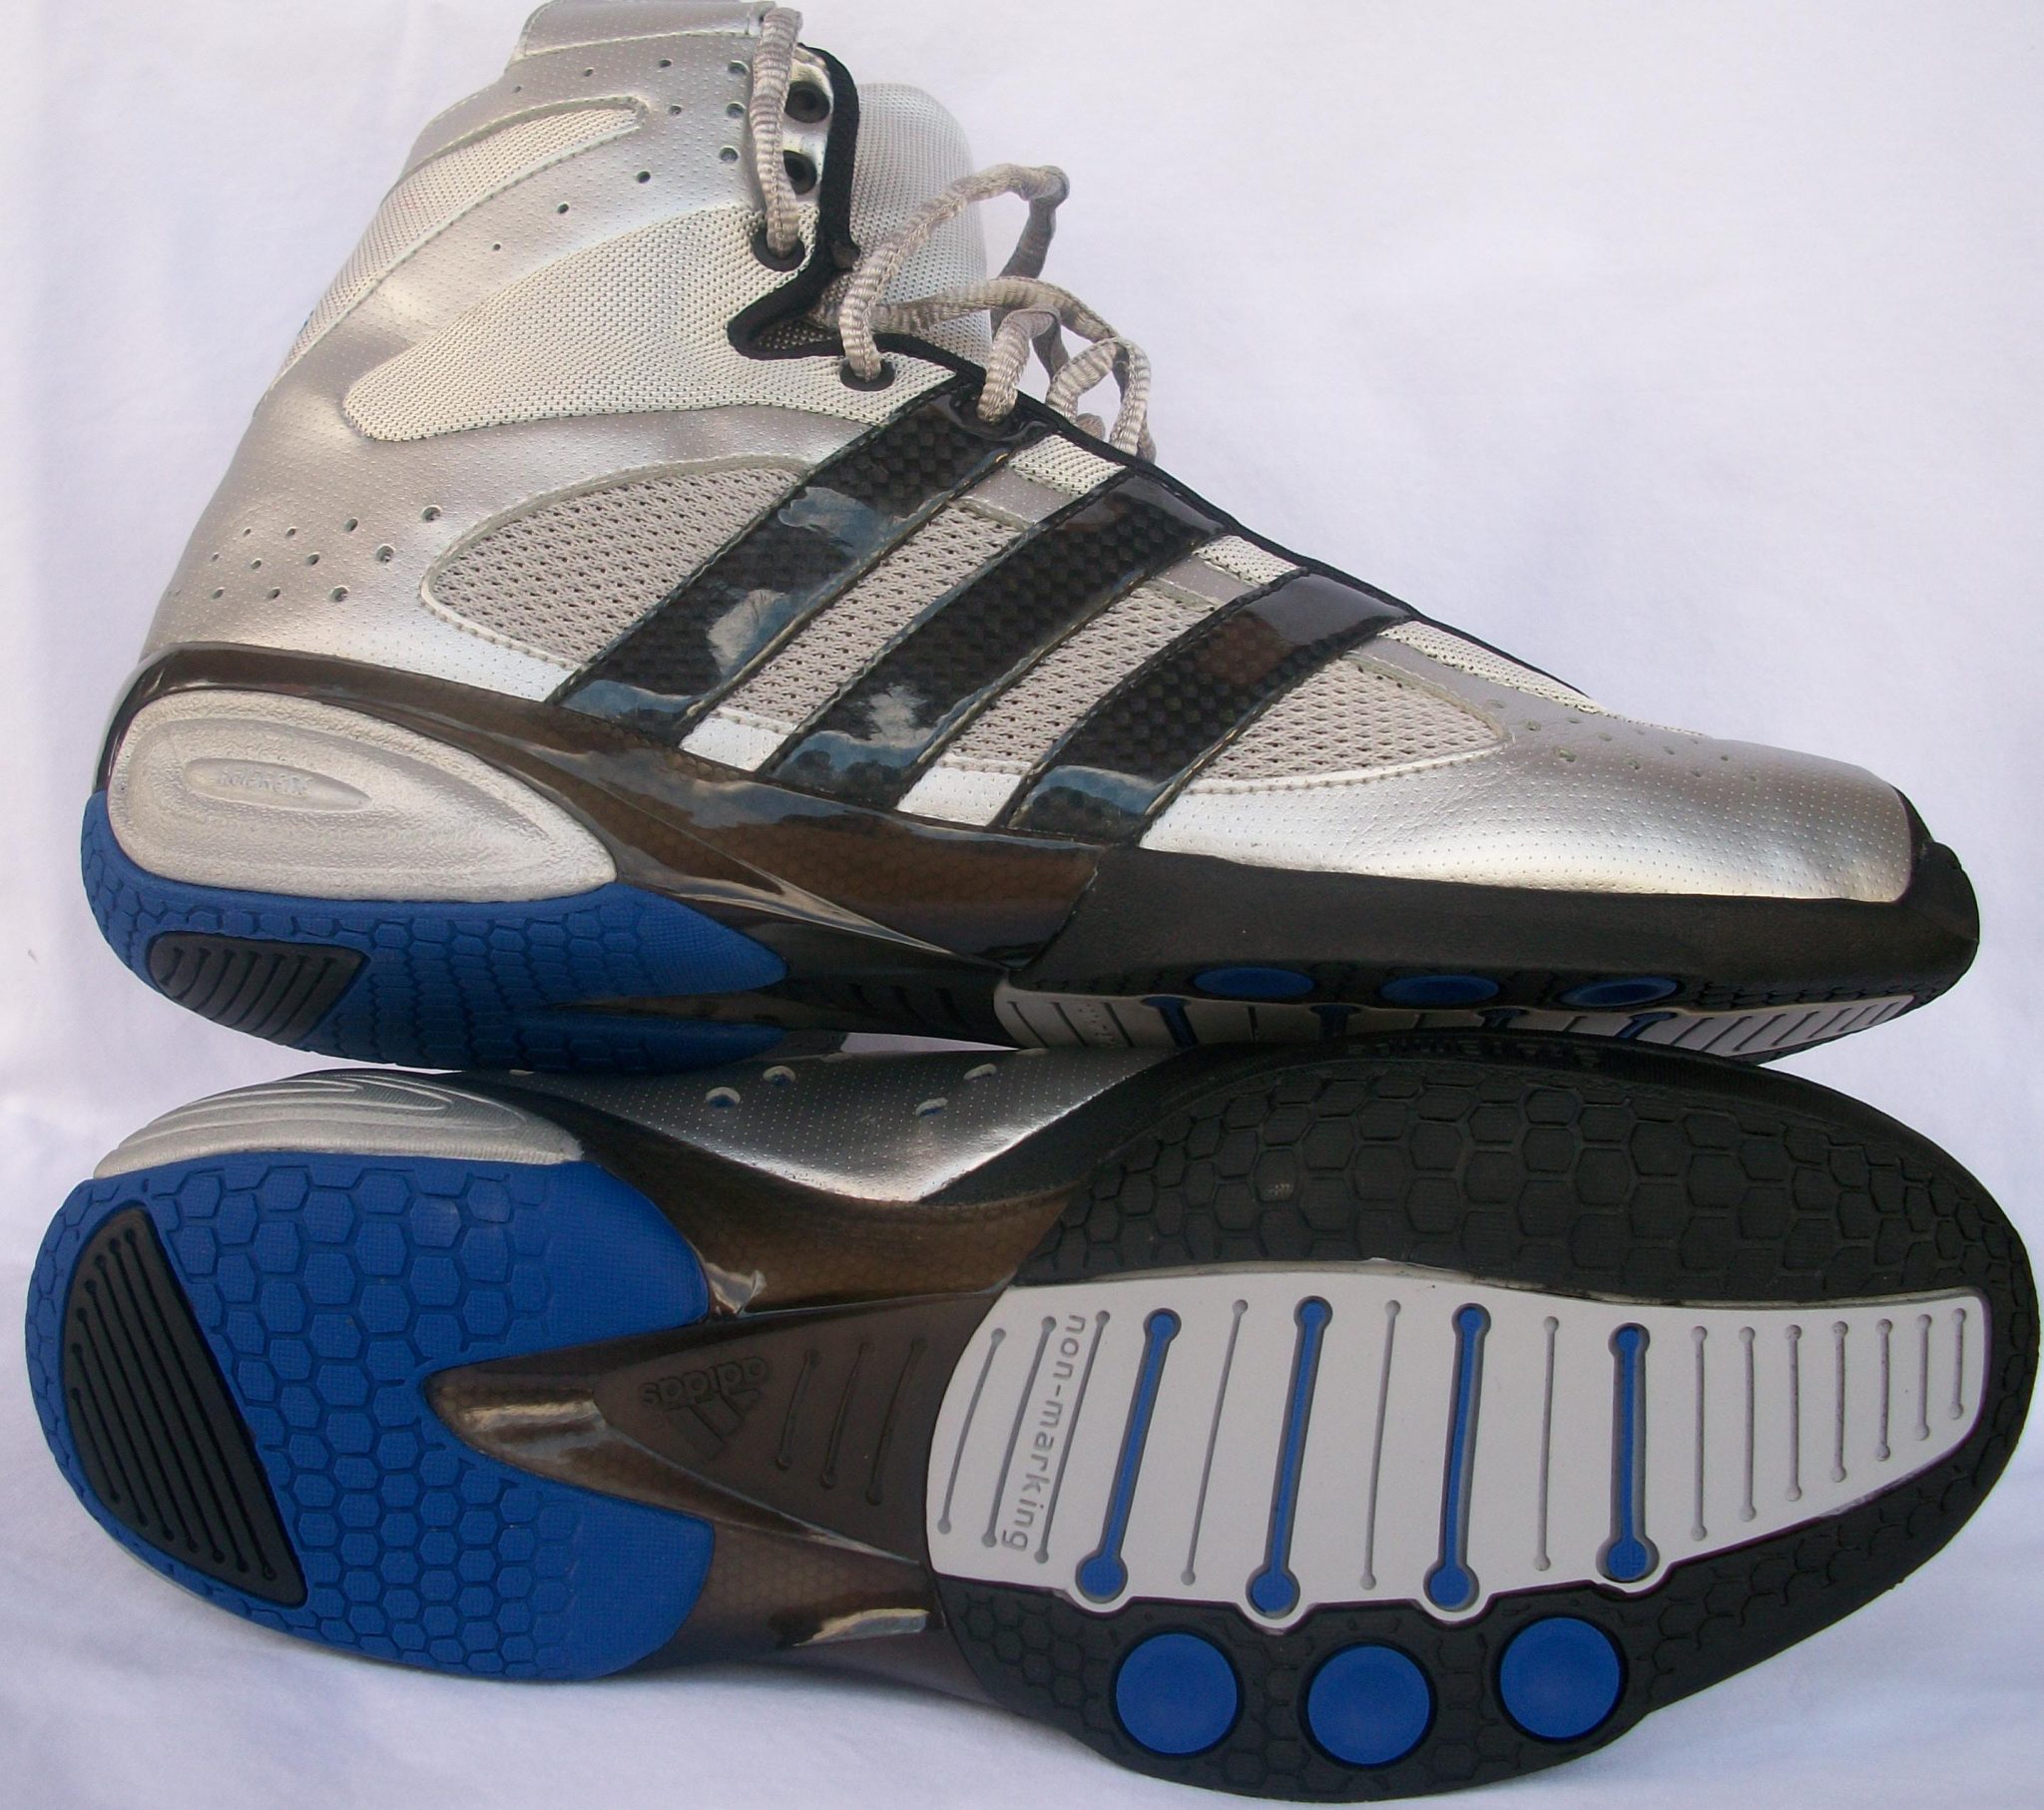 adidas fencing shoes amazon